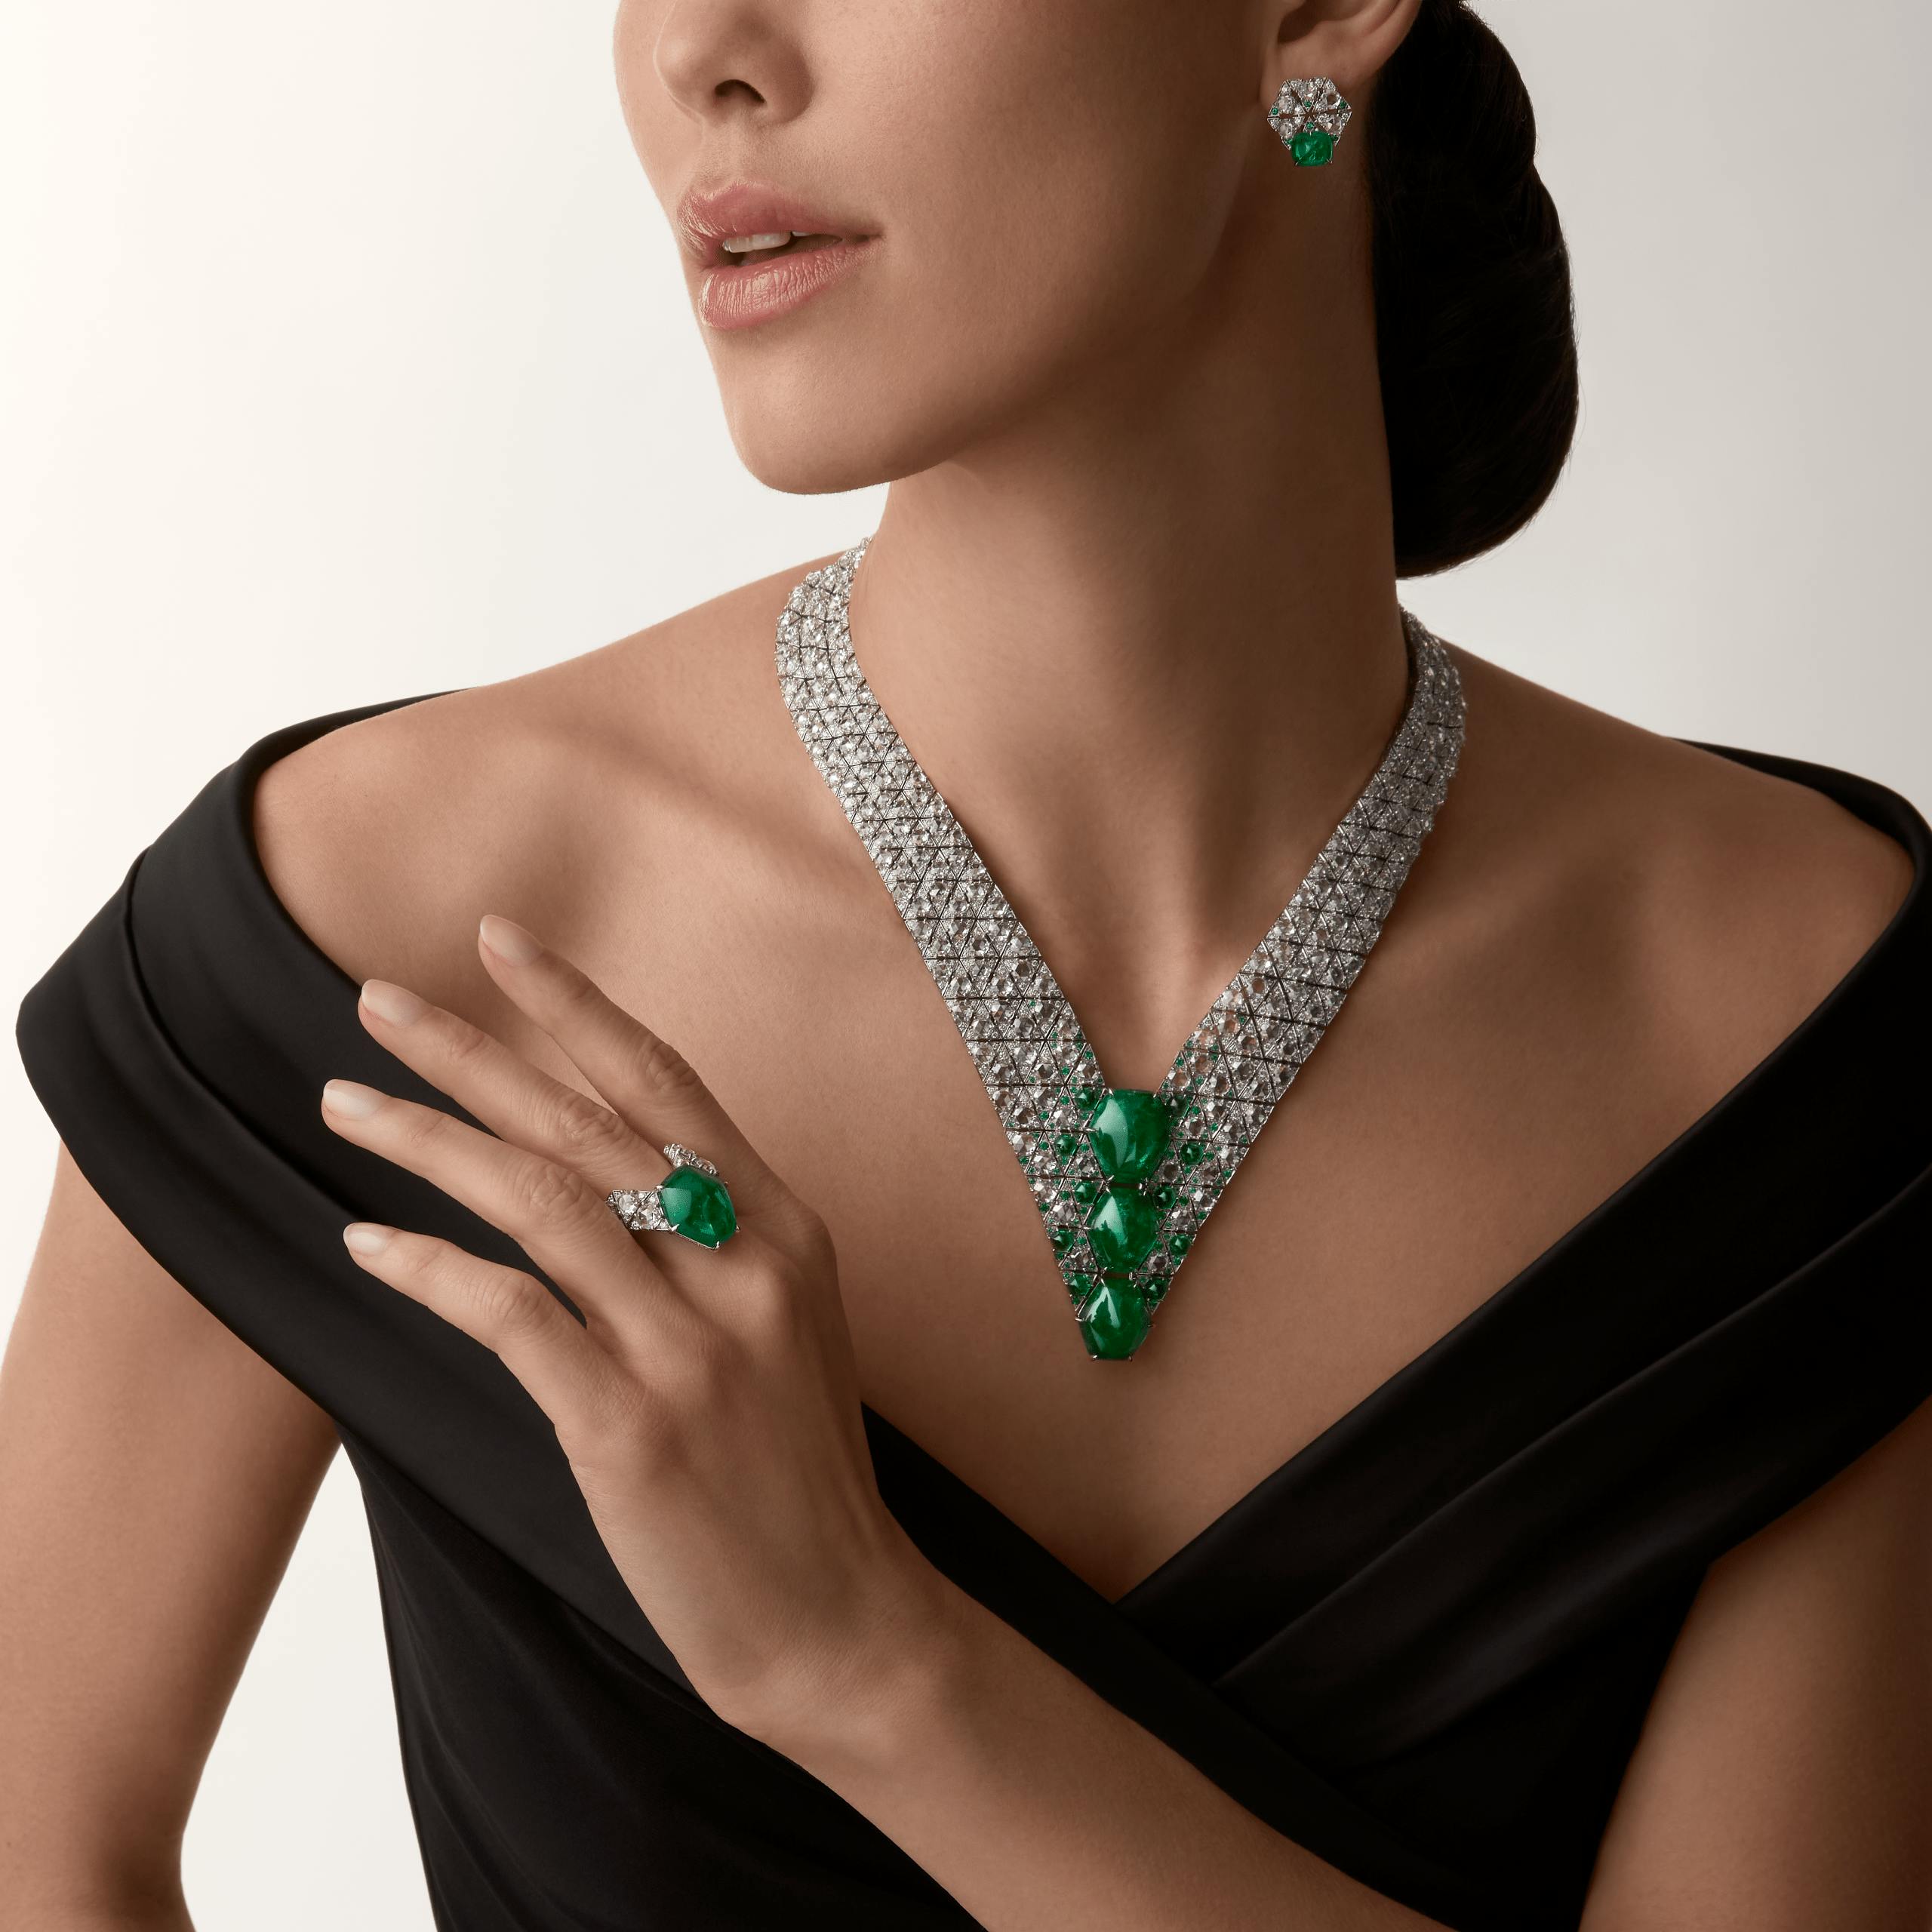 Cartier's Beautés du Monde high jewellery lands in Singapore